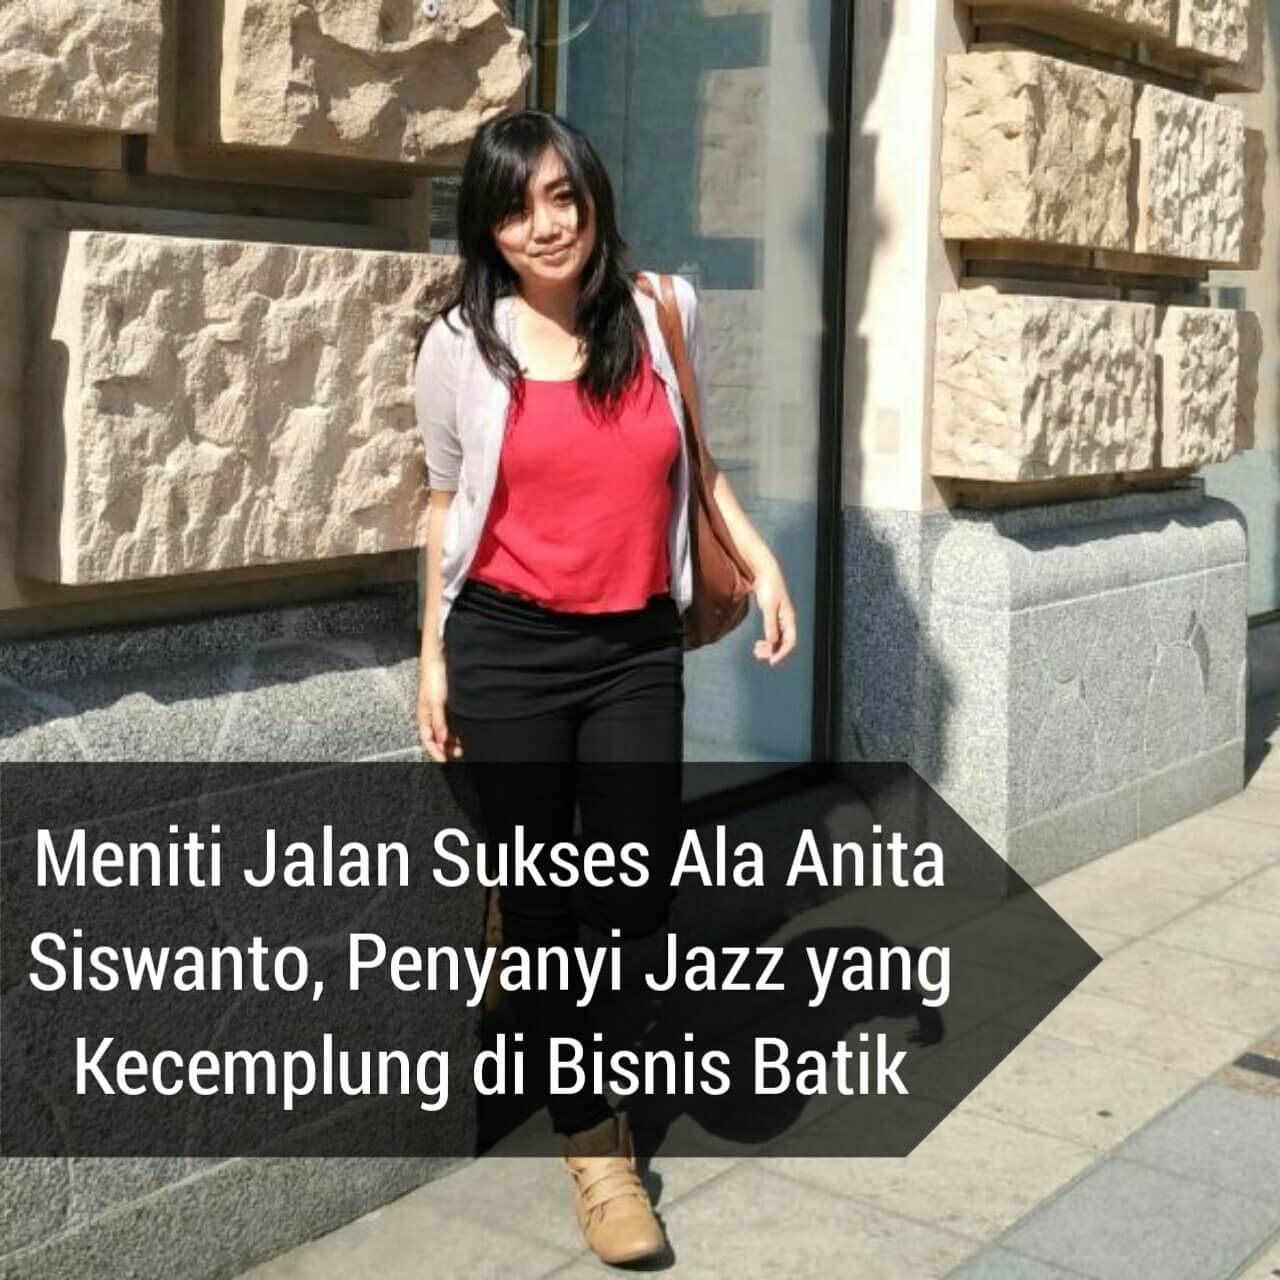 Meniti Jalan Sukses Ala Anita Siswanto, Penyanyi Jazz yang Kecemplung di Bisnis Batik